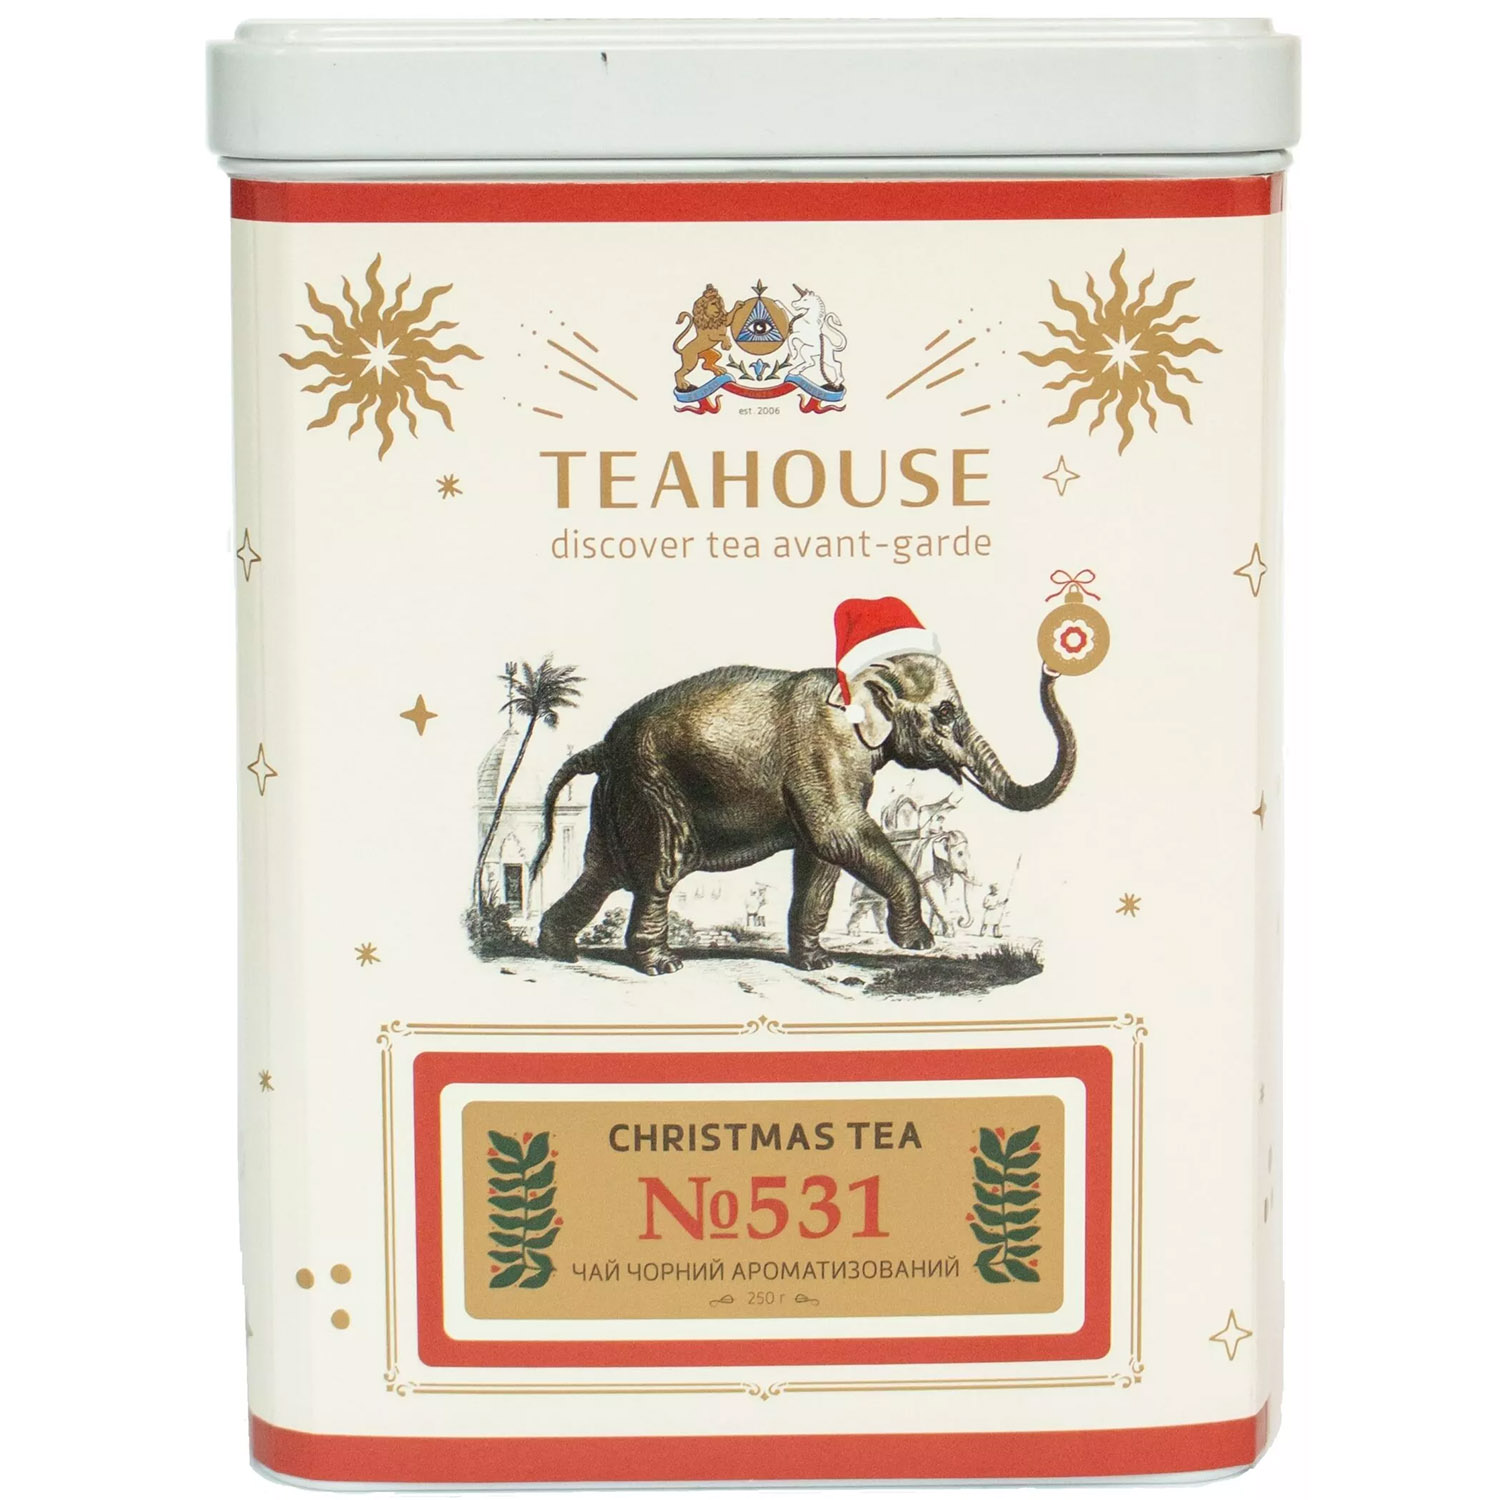 Чай черный Teahouse Christmas Tea №531, 250 г - фото 1